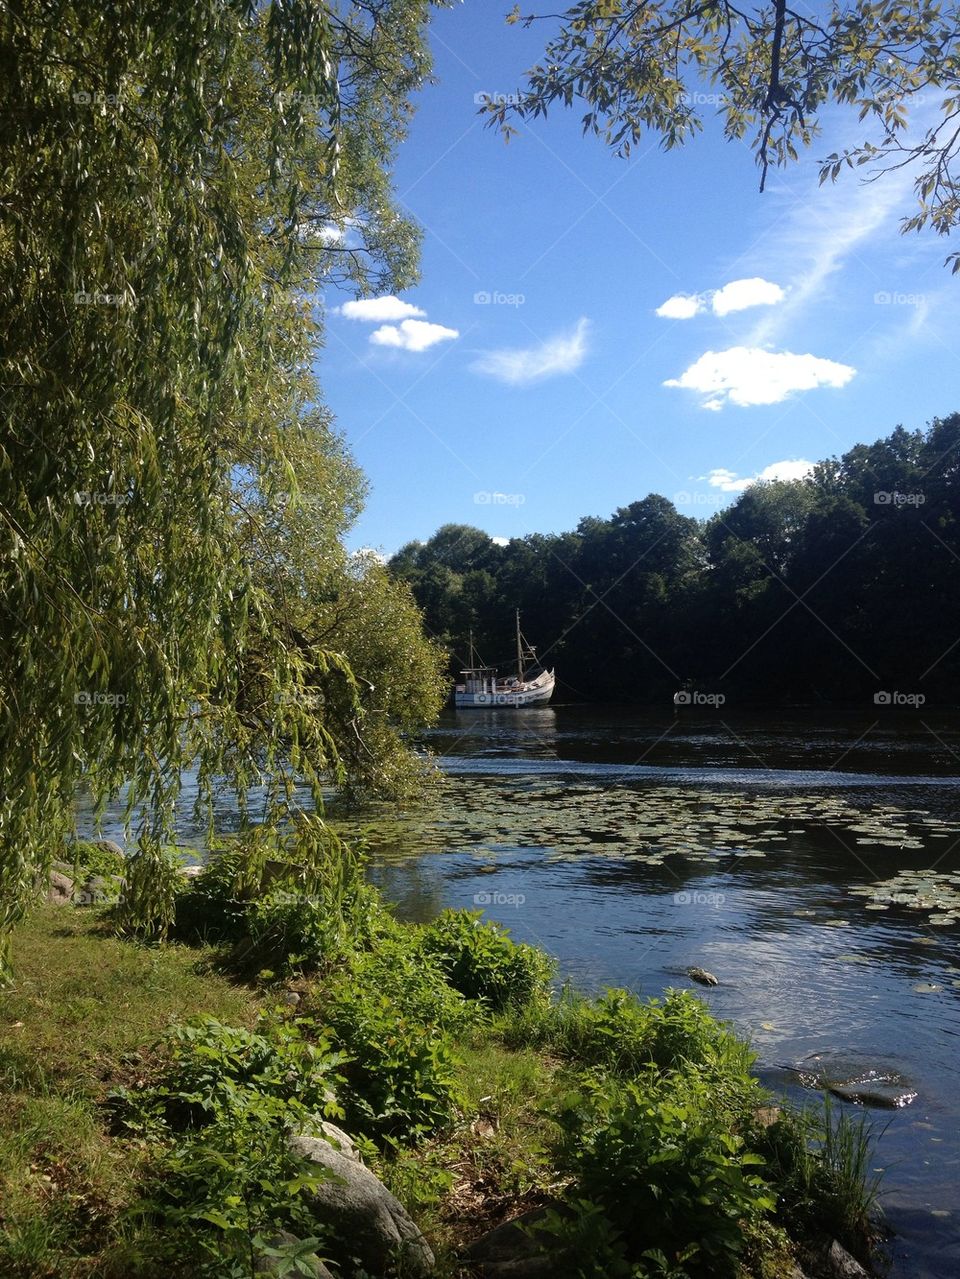 Lake, segling boat, summer, trees, Stockholm